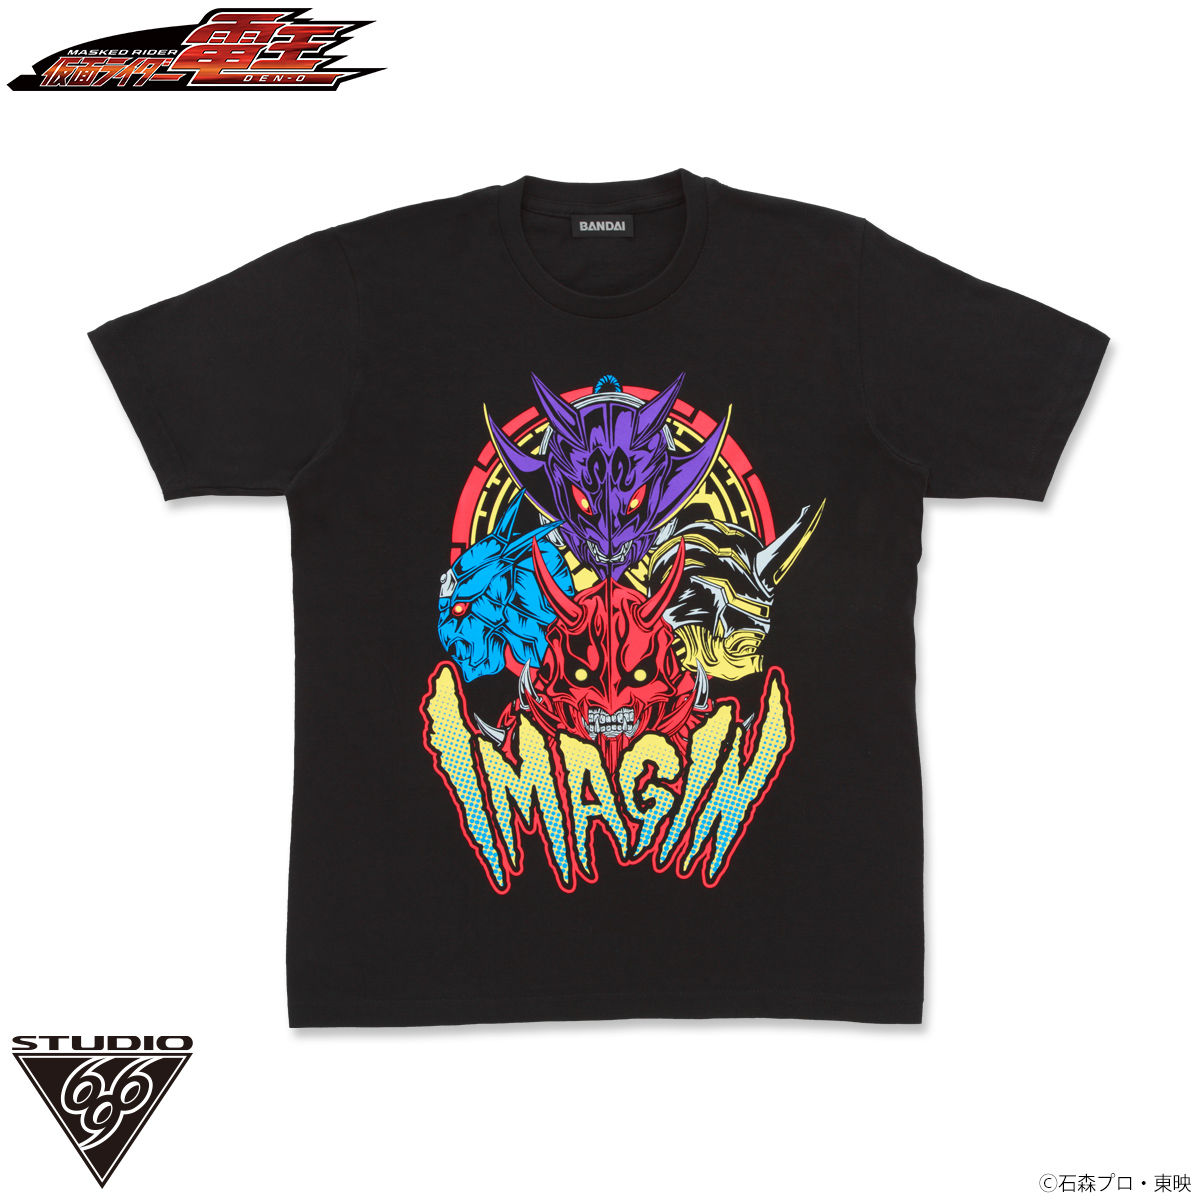 Imagins feat. STUDIO696 T-shirt